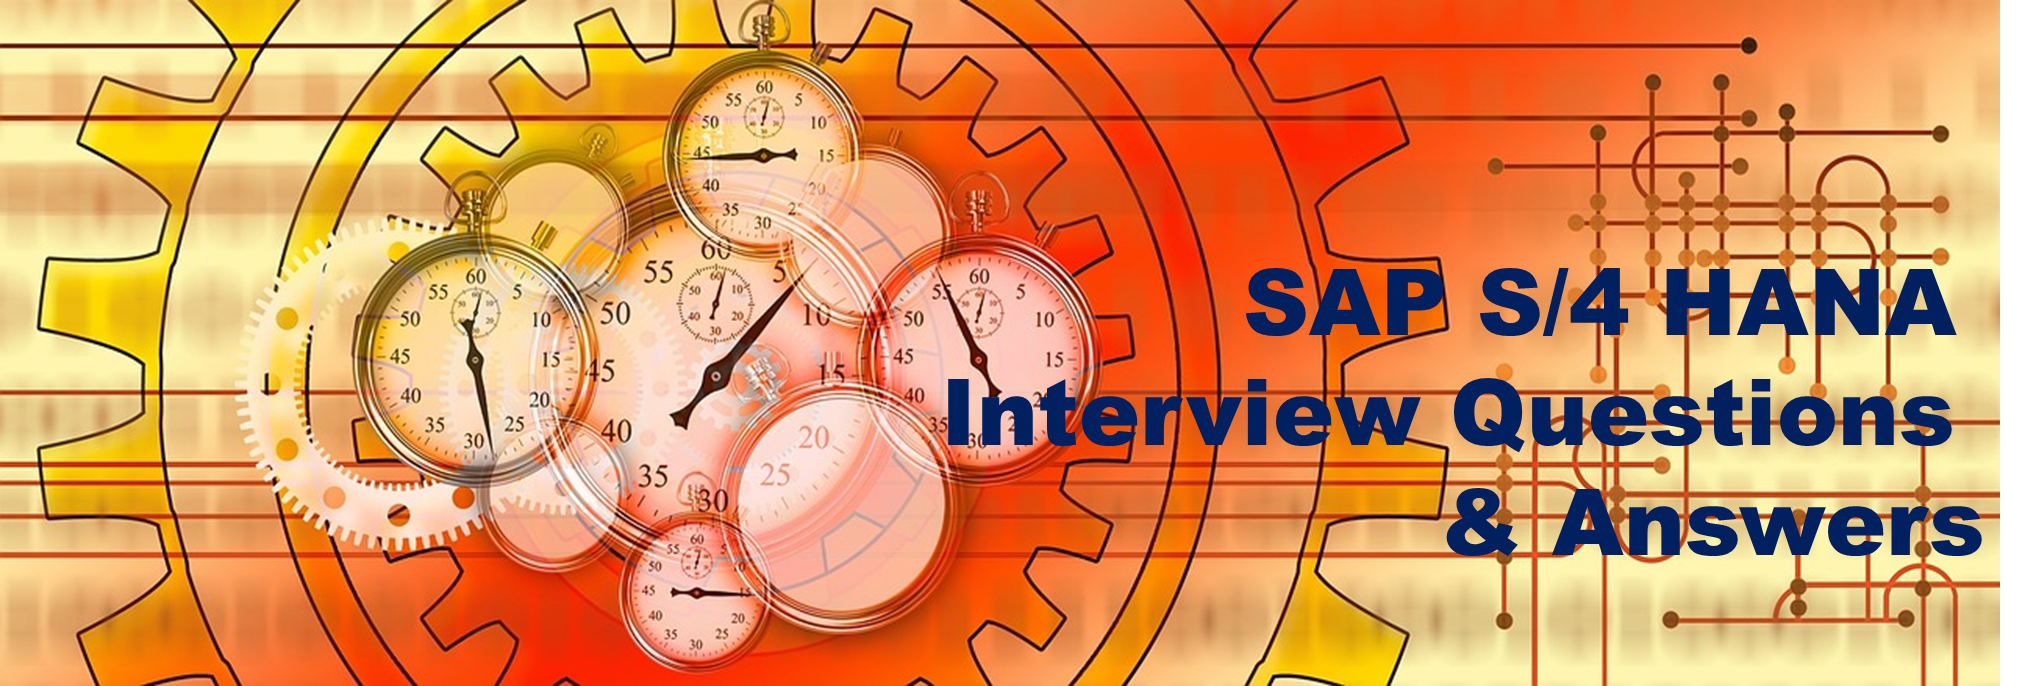 SAP S4 HANA Interview questions